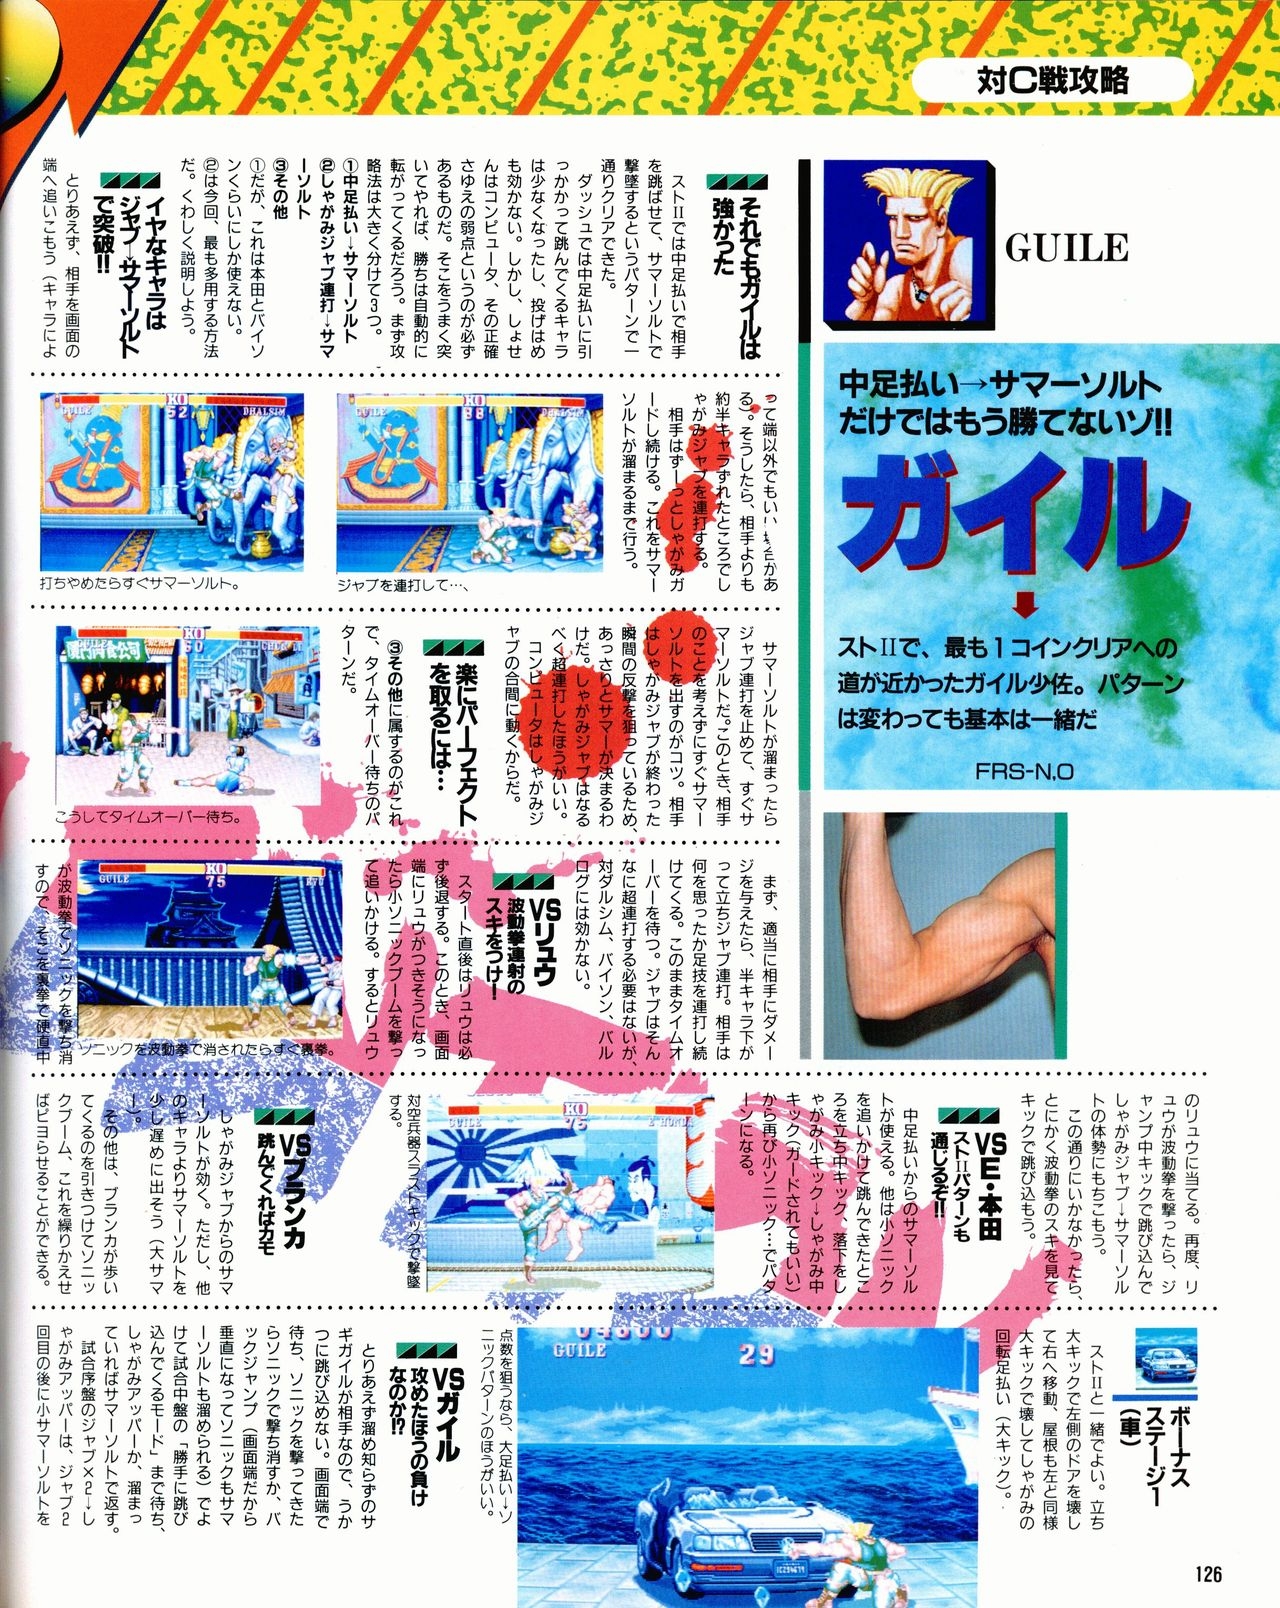 Street Fighter II Dash - Gamest special issue 77 127